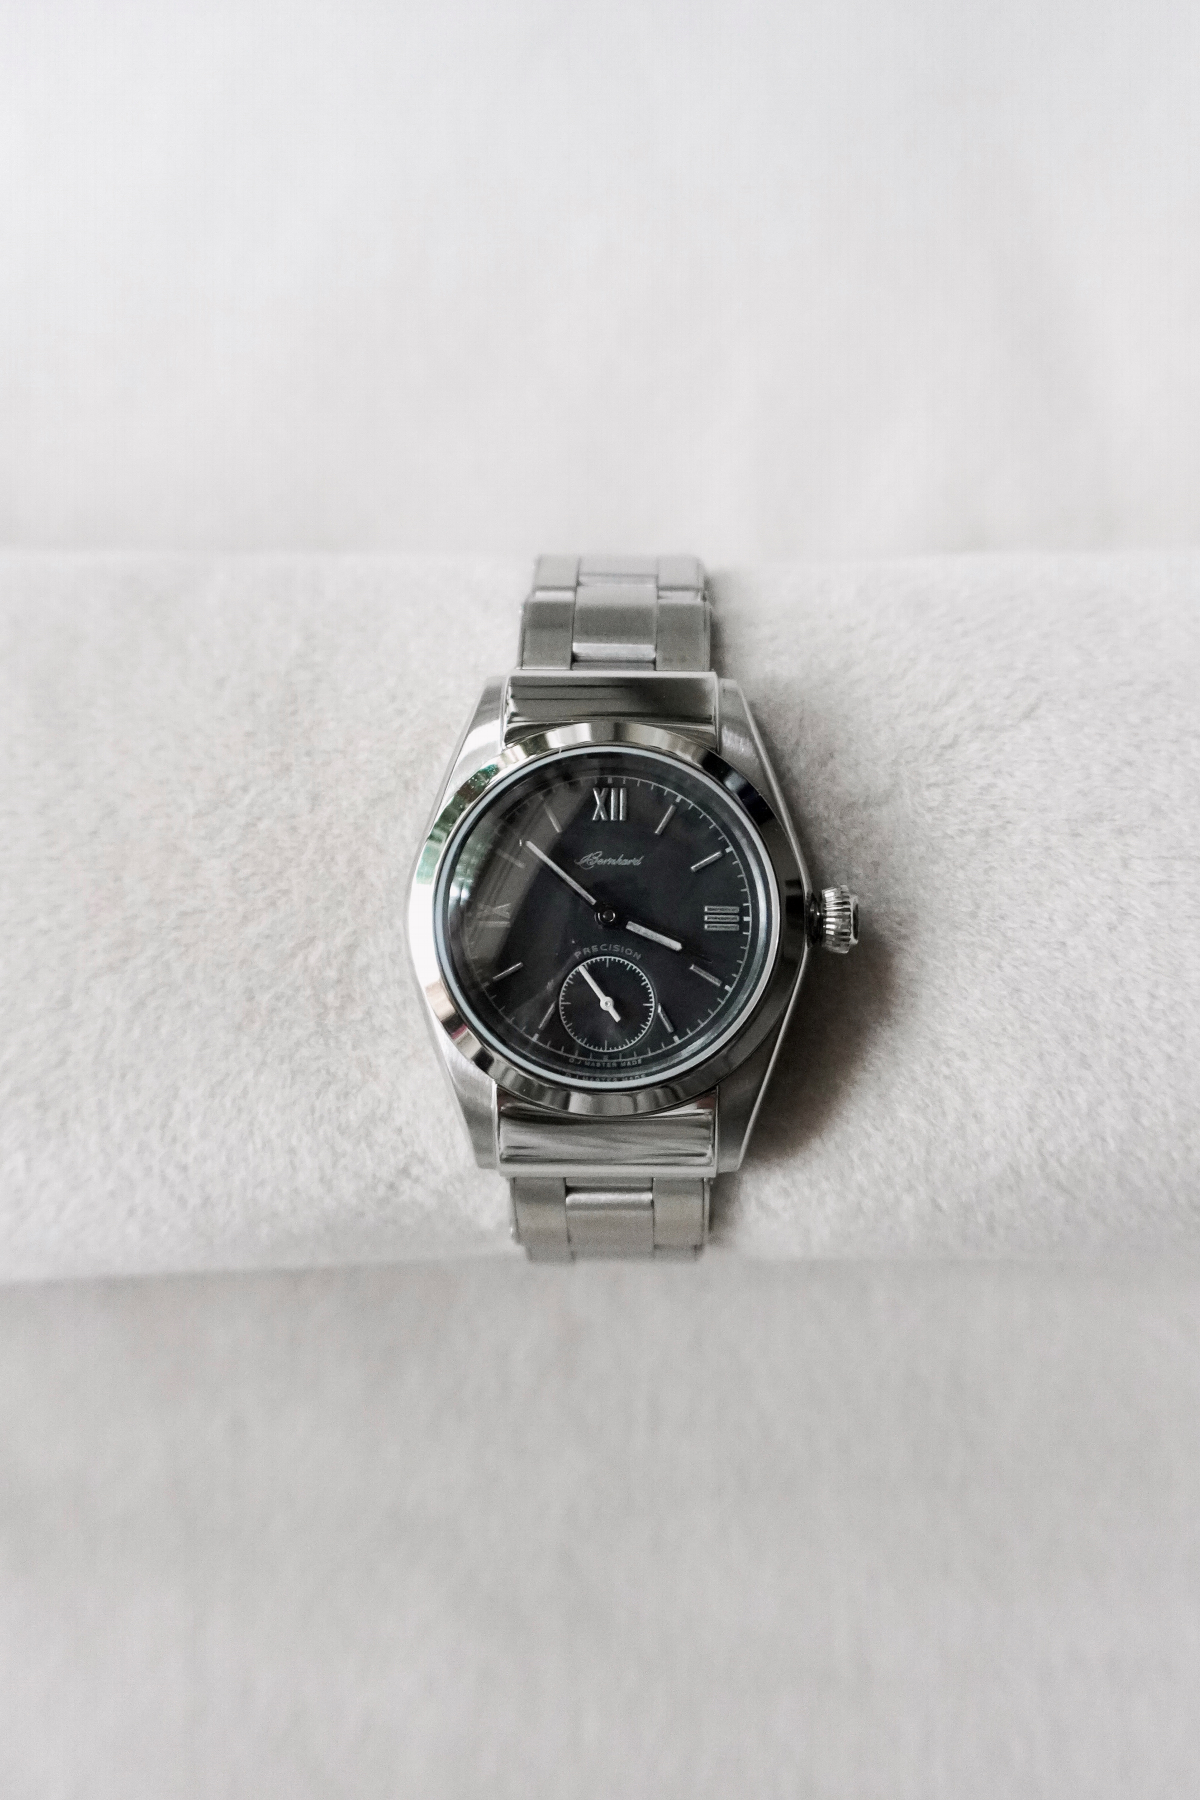 [OLD JOE BRAND] Bernhardt Wristwatch - Silver